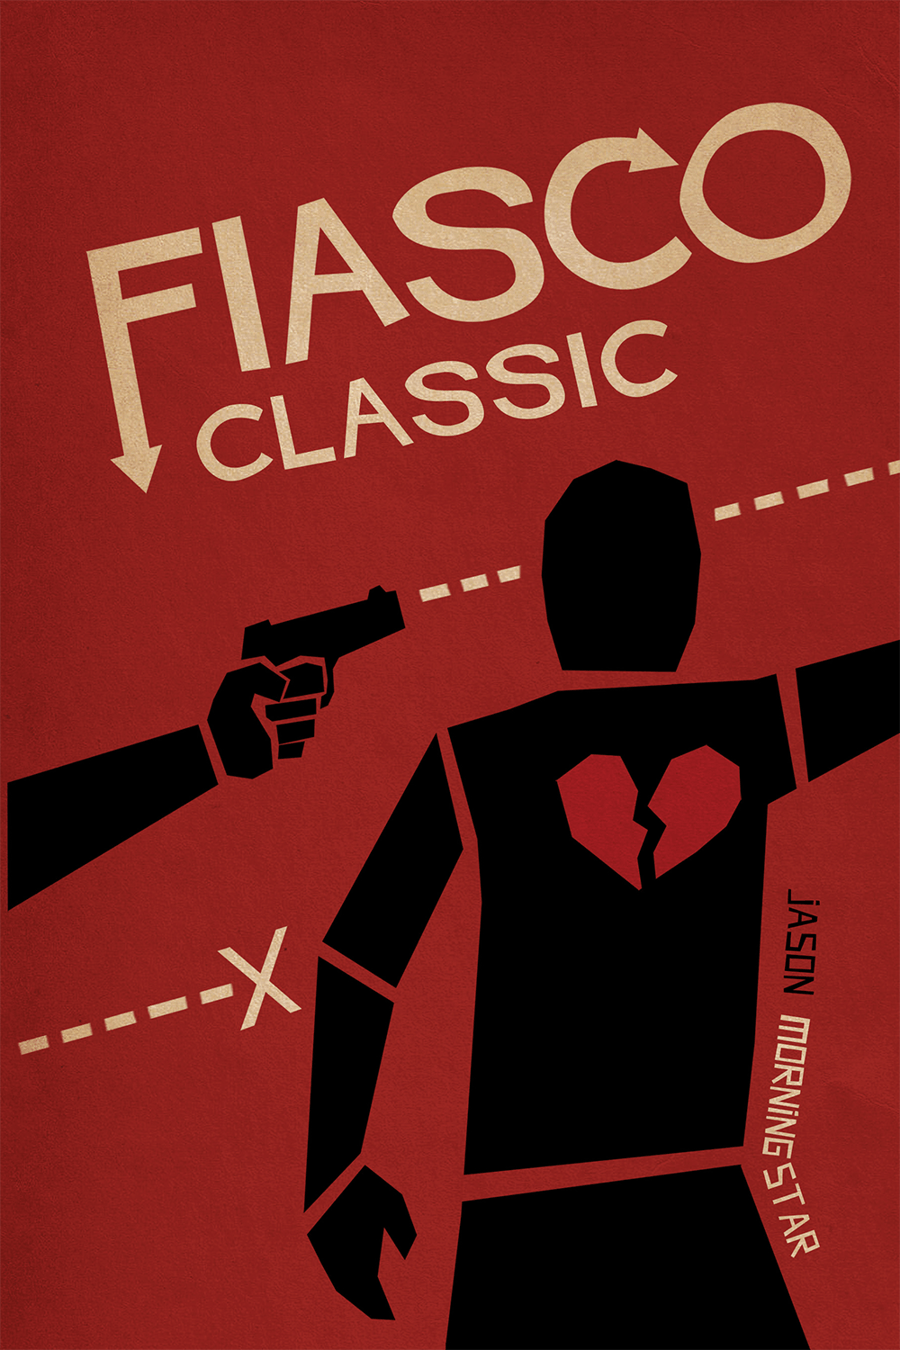 Fiasco Classic (RPG core book) - The Fourth Place